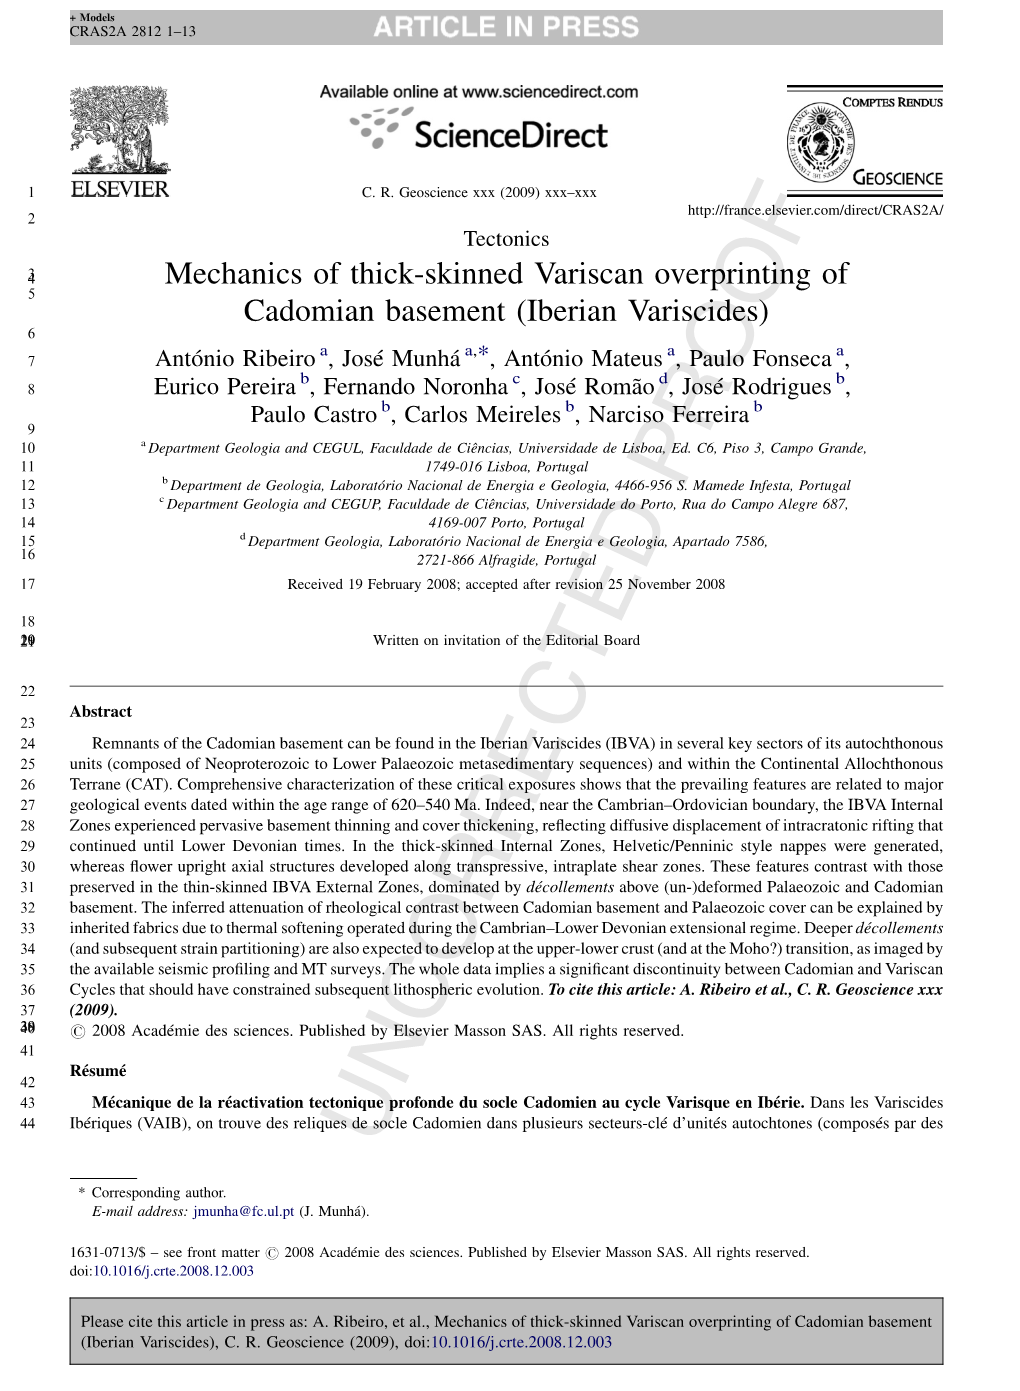 Mechanics of Thick-Skinned Variscan